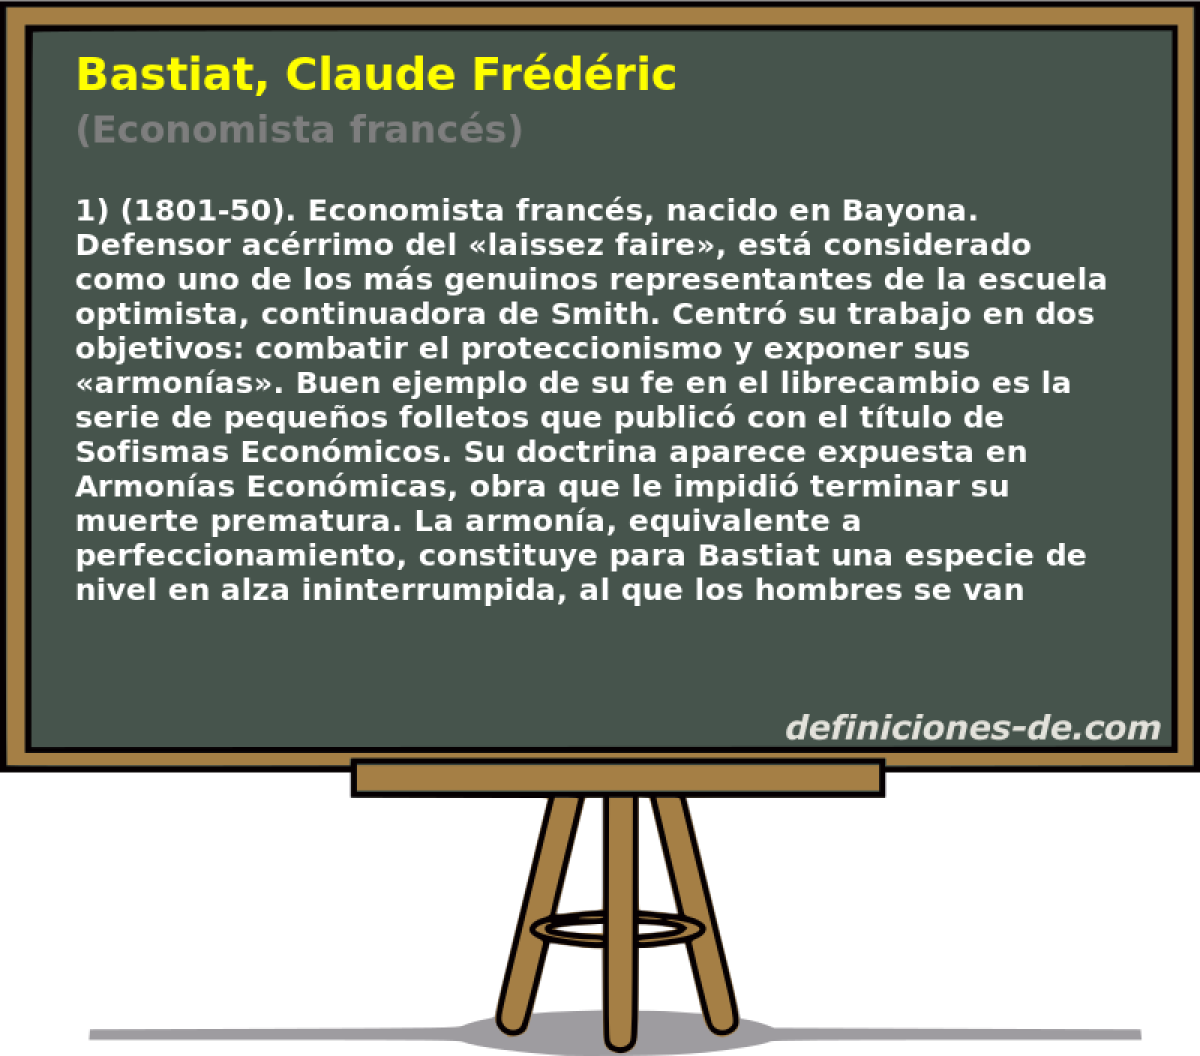 Bastiat, Claude Frdric (Economista francs)